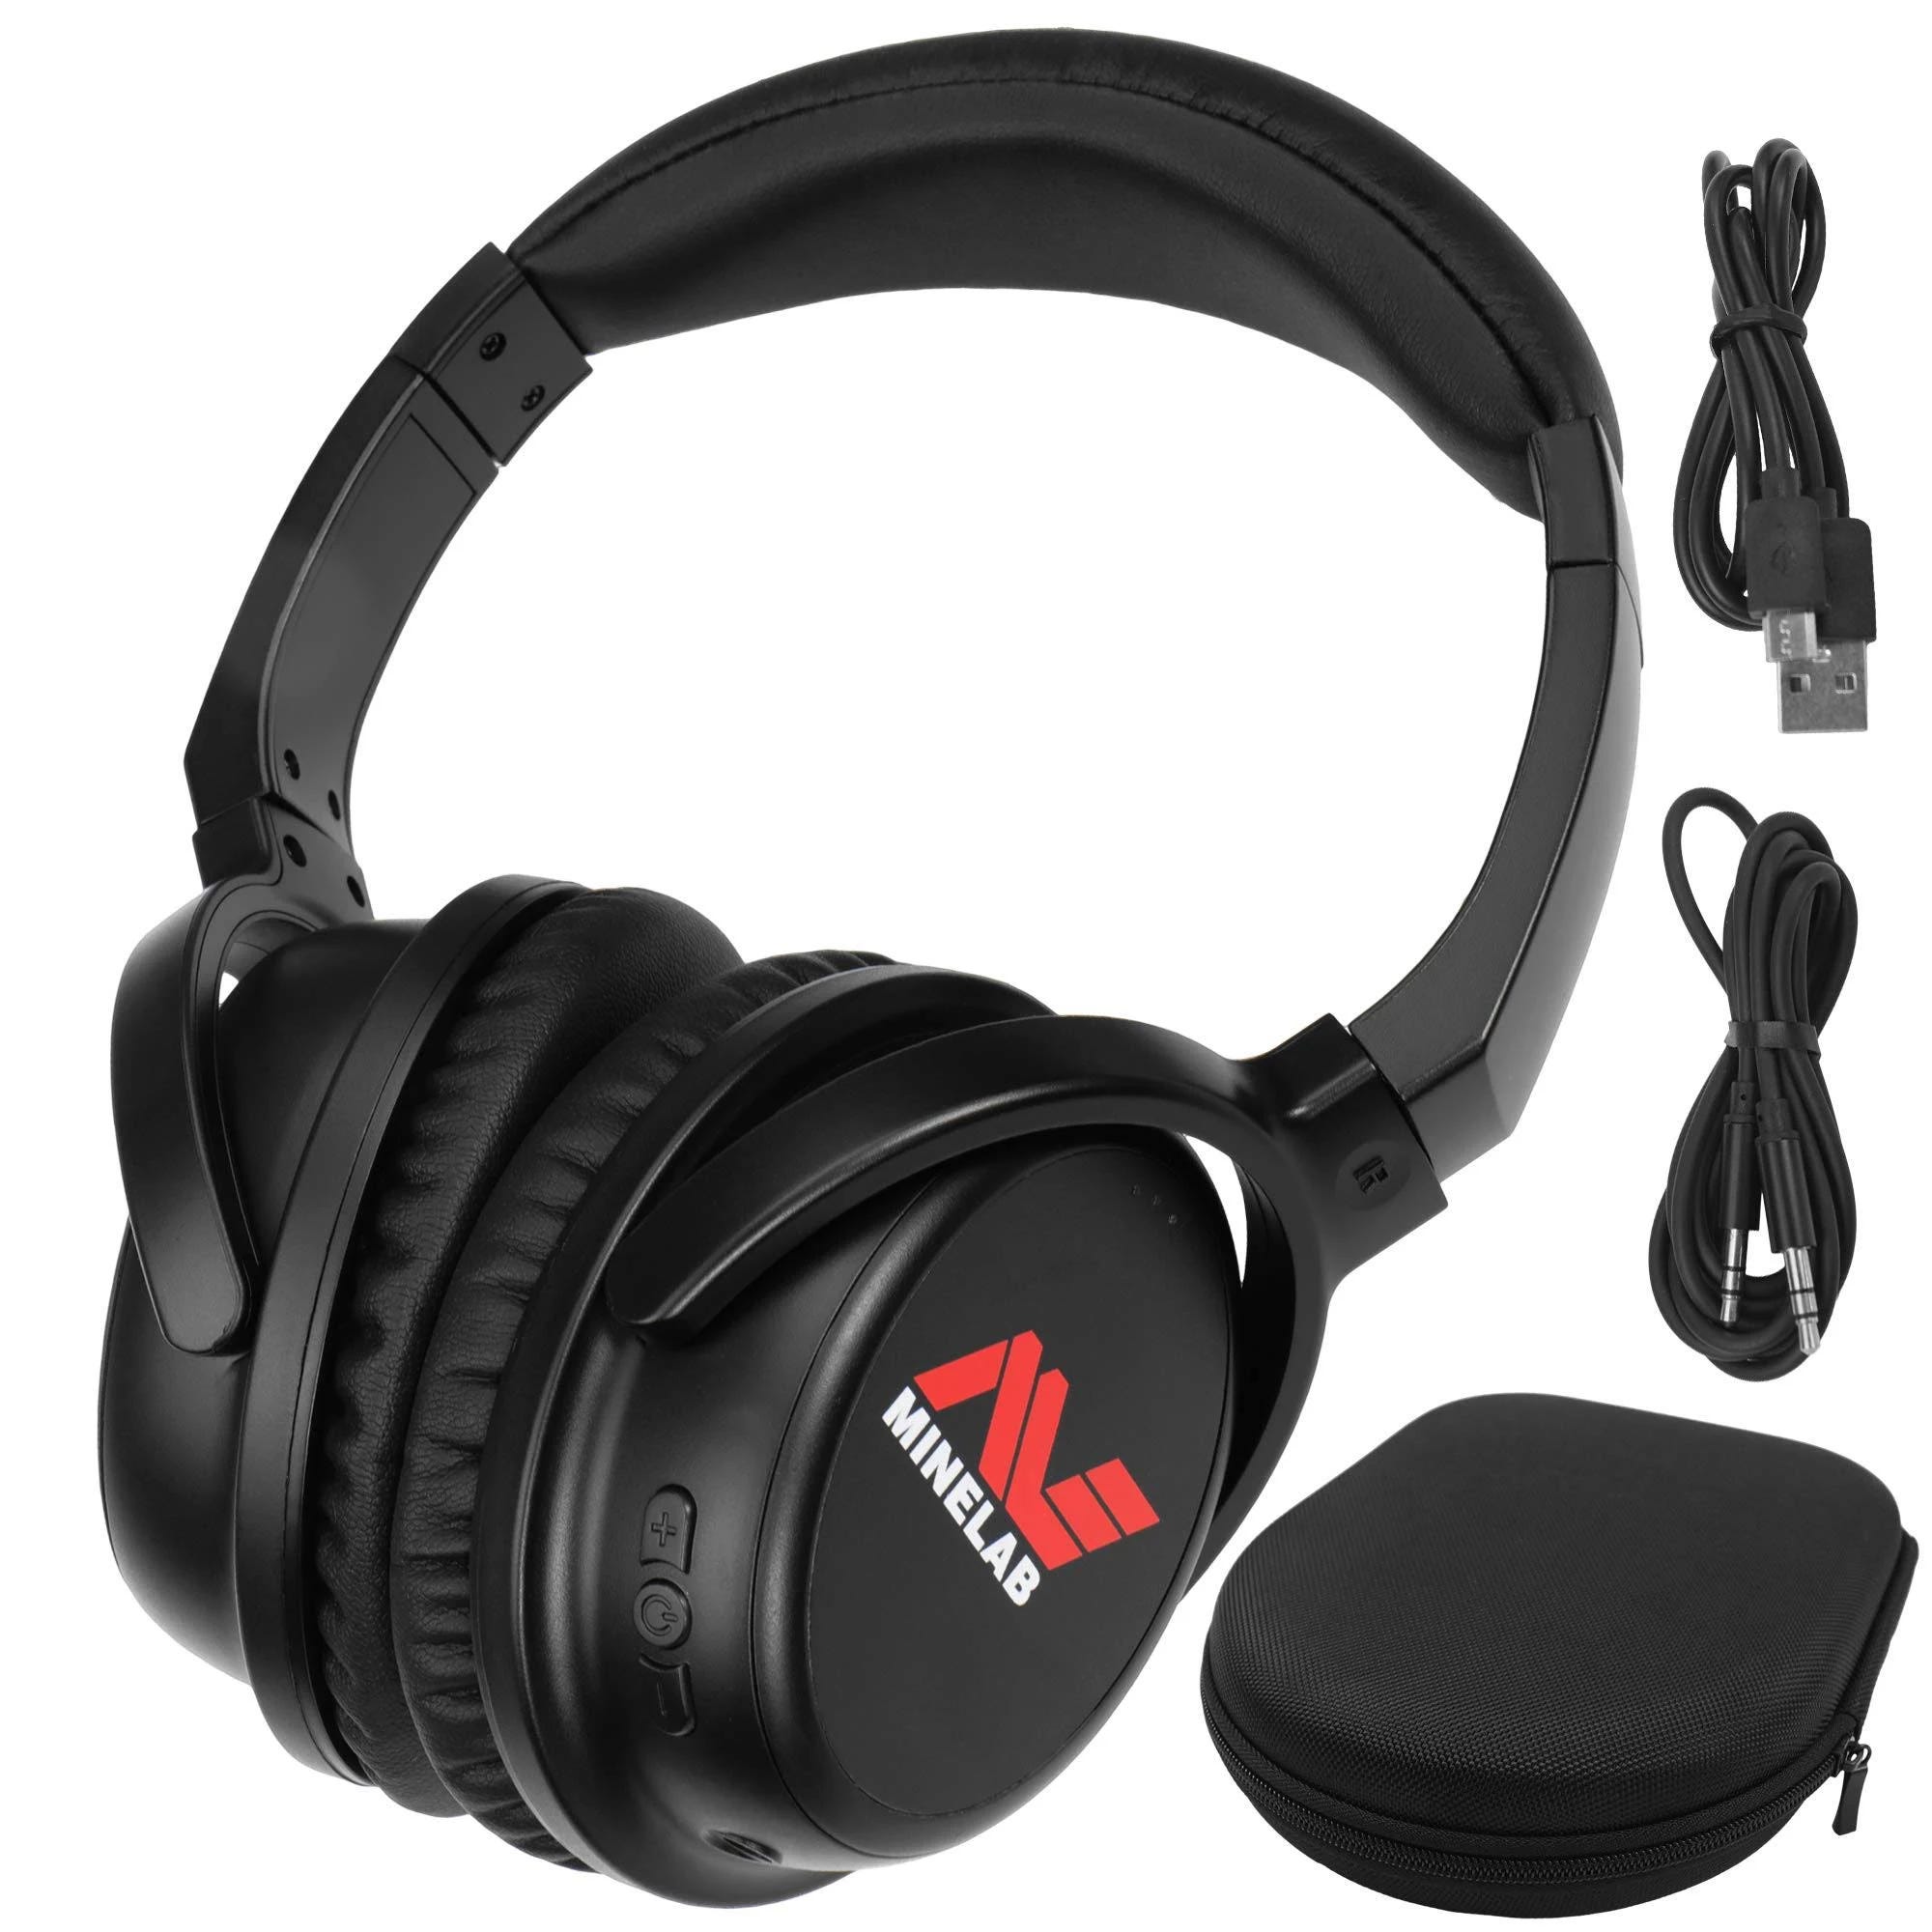 Minelab Equinox 800 Wireless Bluetooth Headphones Case & 1/8